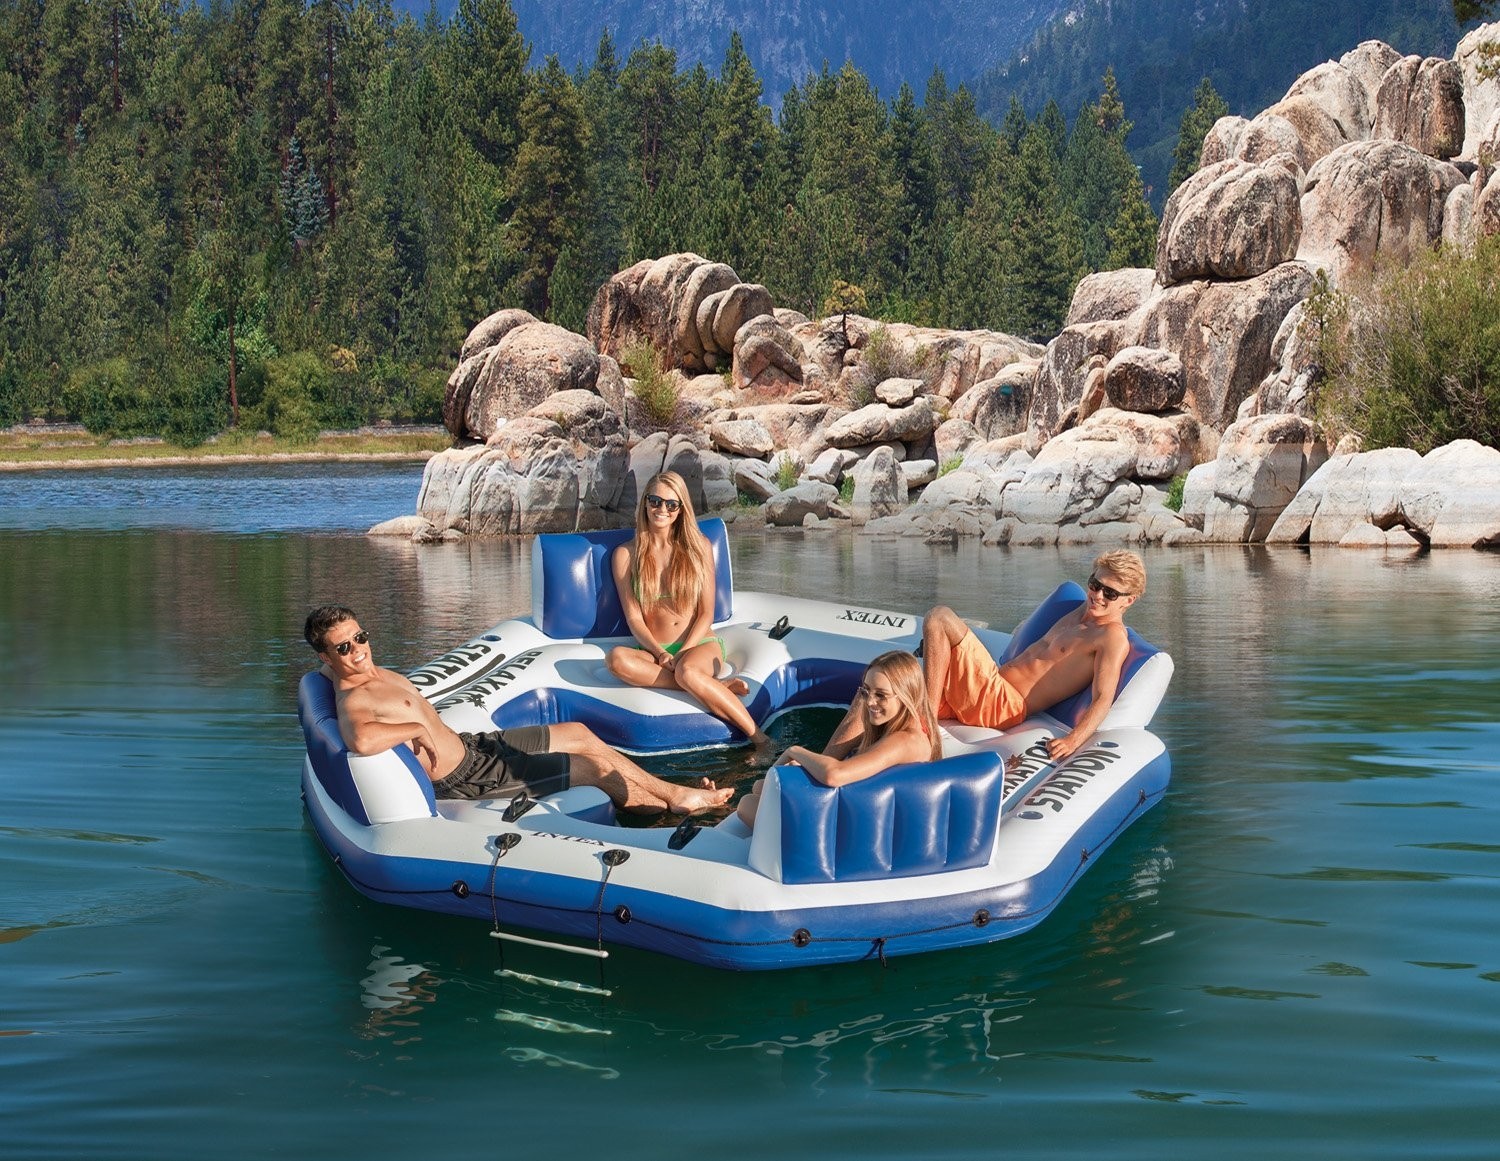 Giant 4 person inflatable lake raft pool float ocean floating